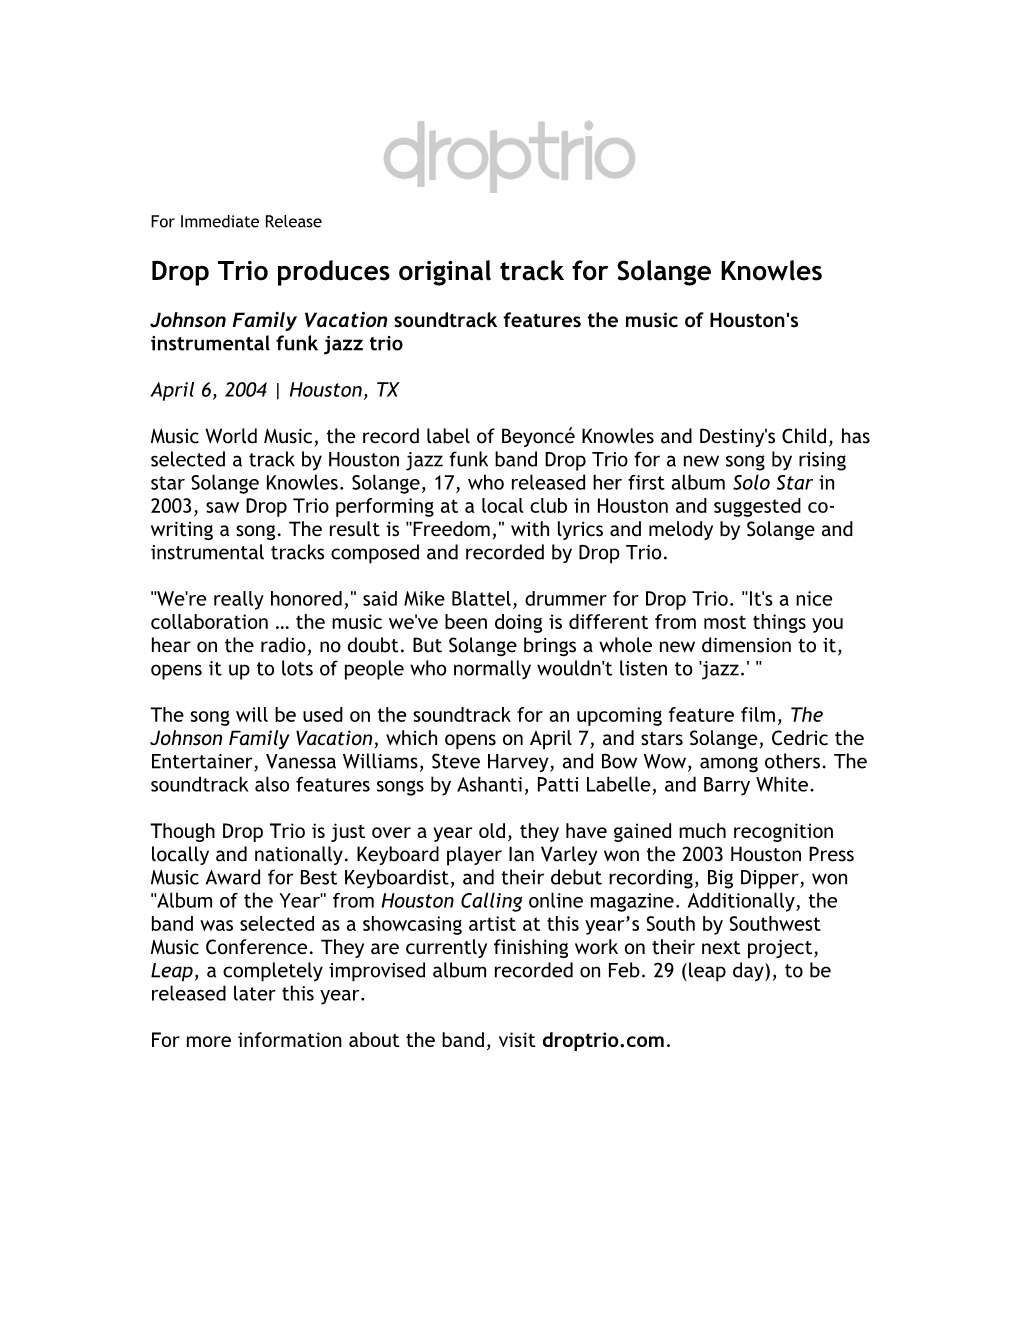 Drop Trio Produces Original Track for Solange Knowles